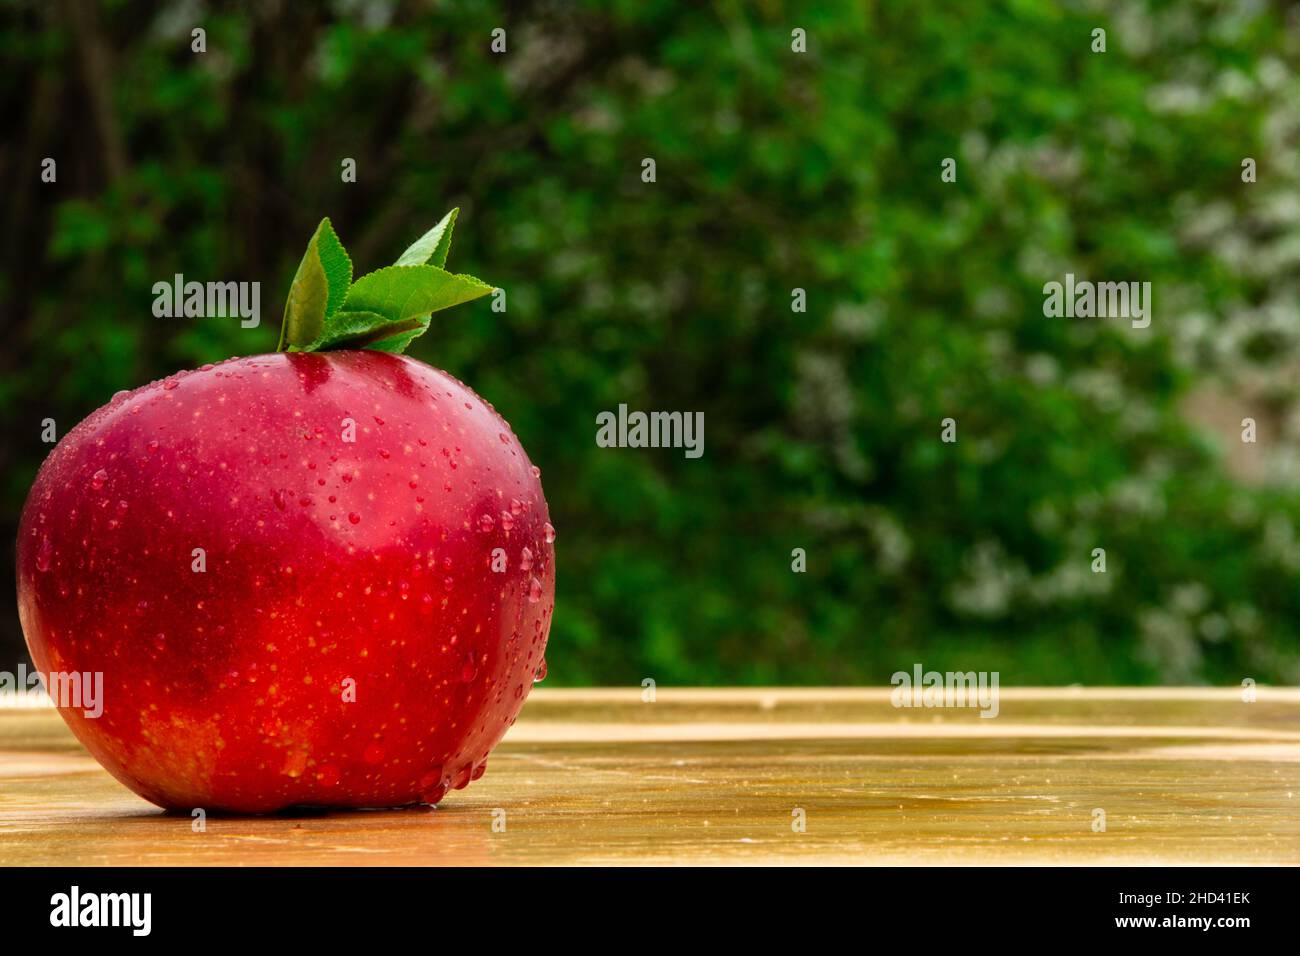 Fresh tasty bright red apple in garden, good for vegan food, advertisement, vitamins for immune system Stock Photo